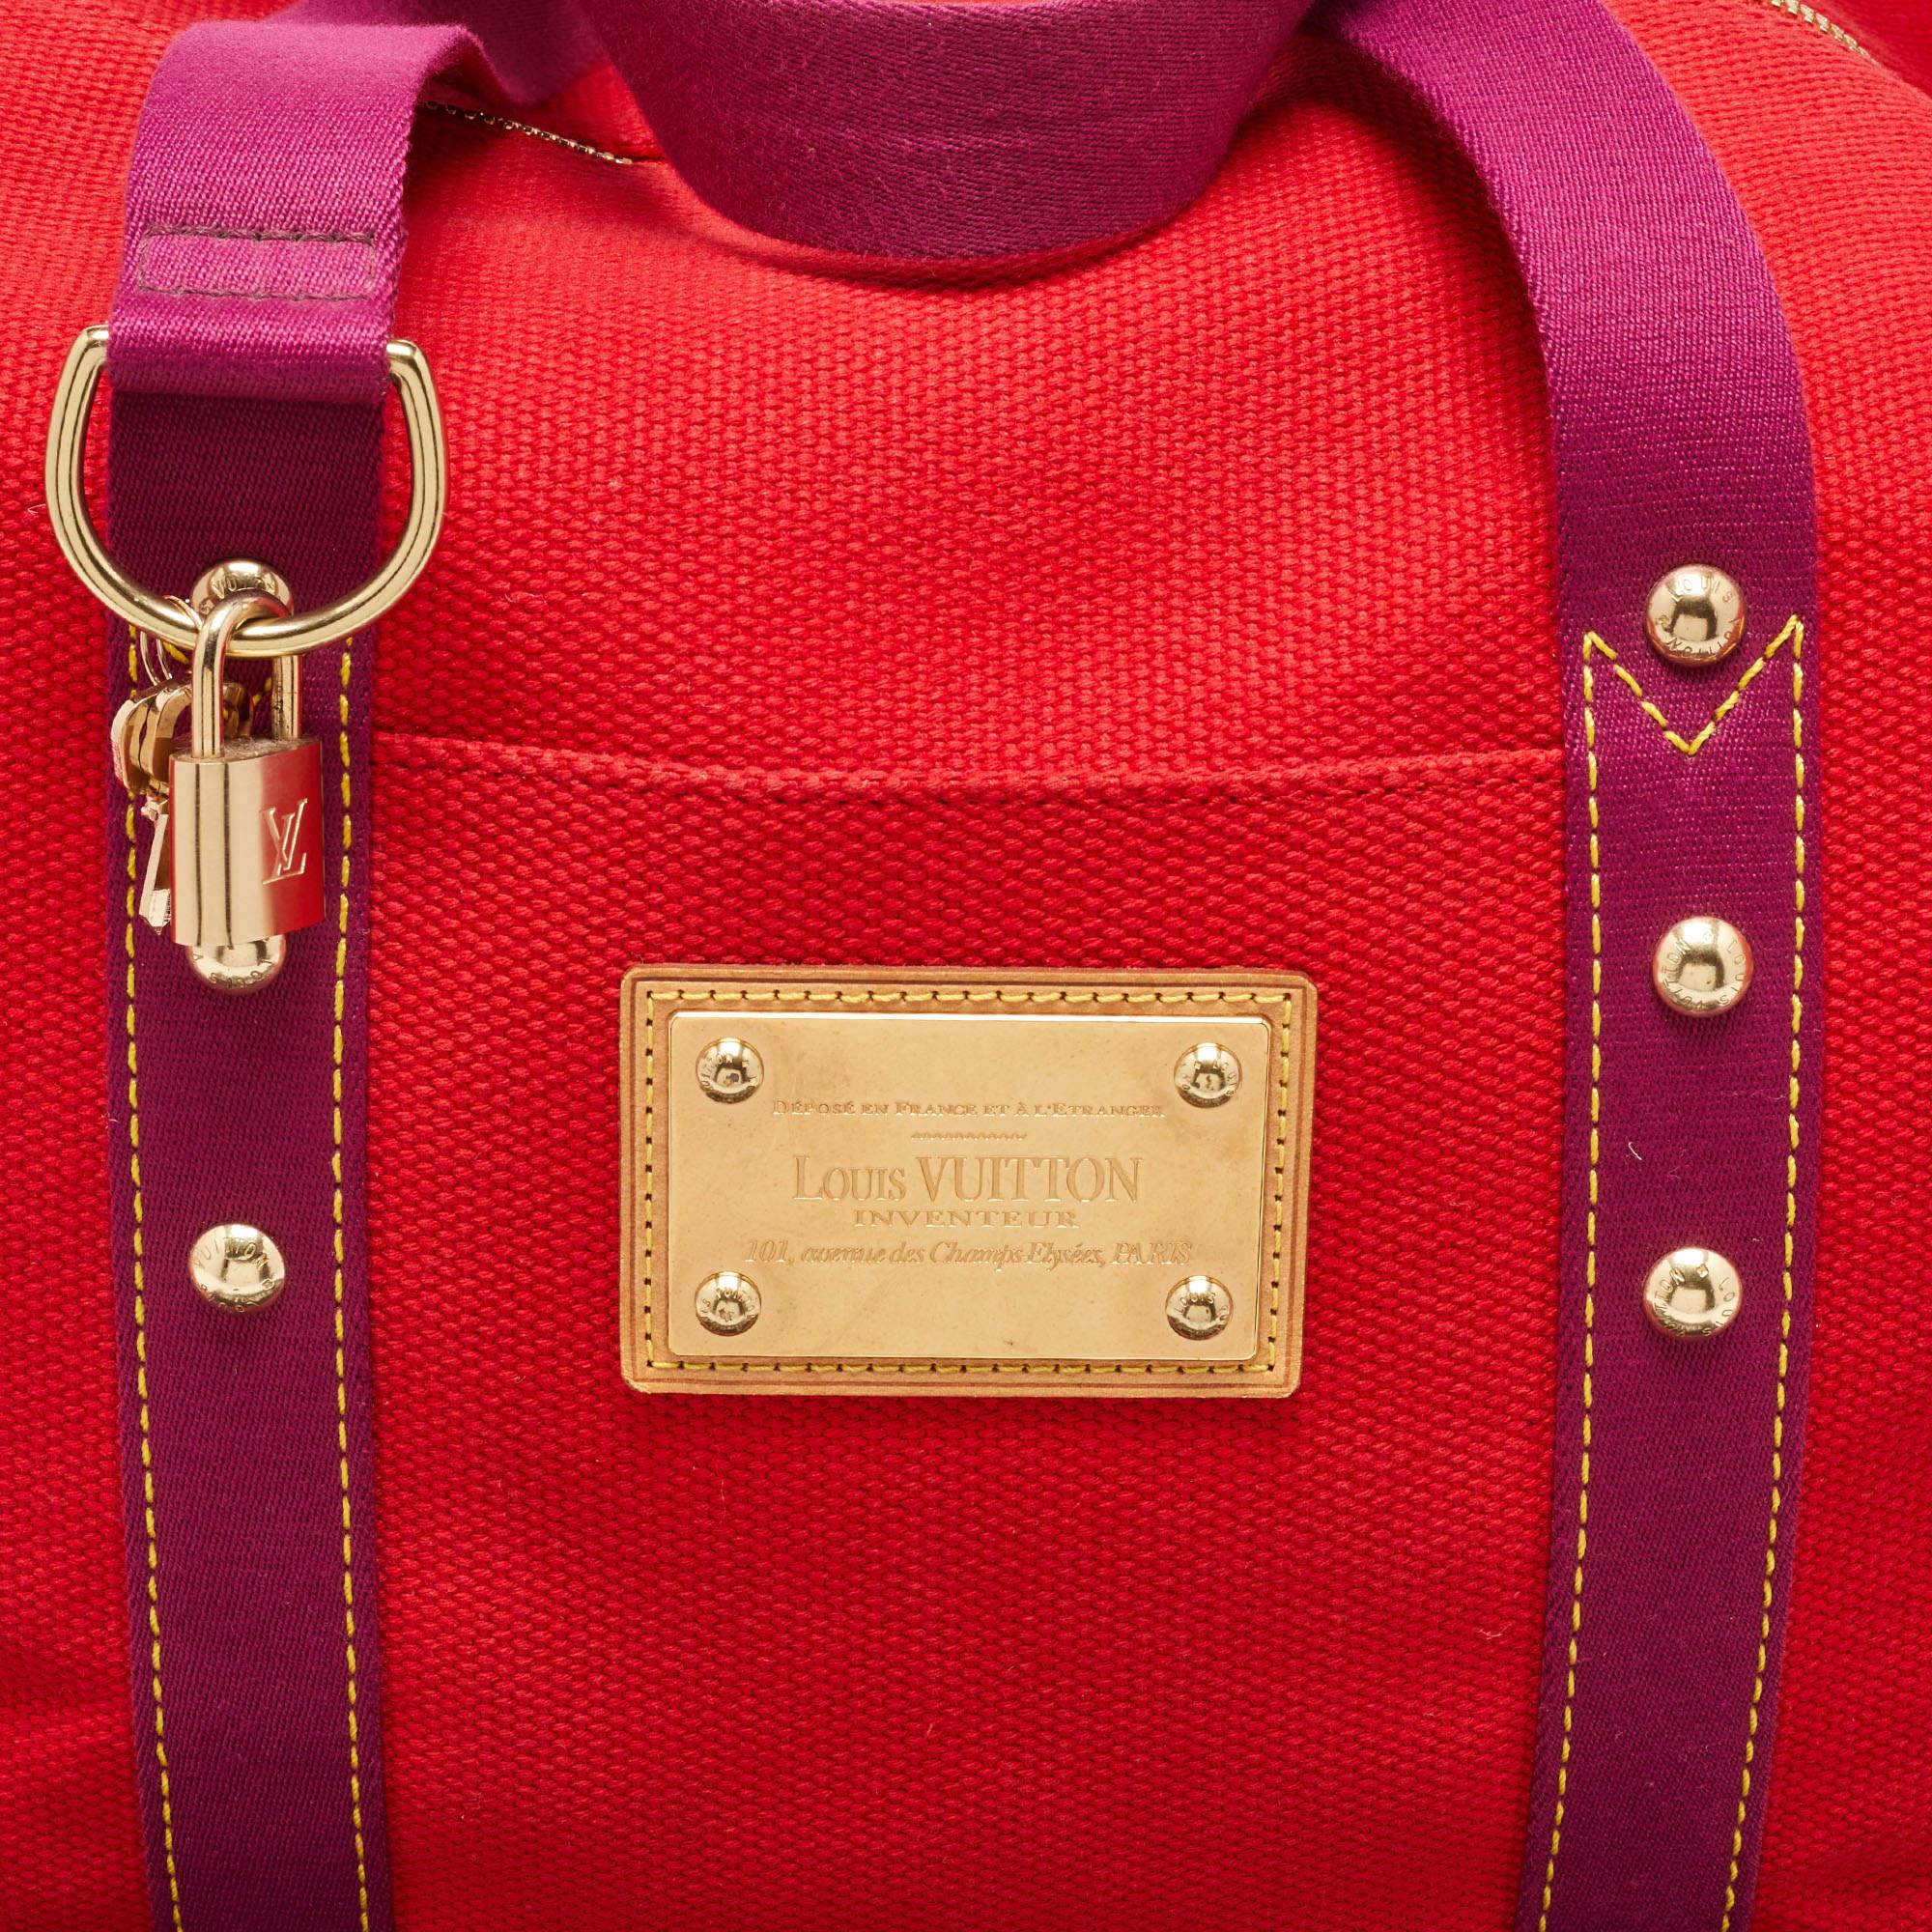 Louis Vuitton Rouge Toile Canvas Antigua Sac Weekend Bag For Sale 3